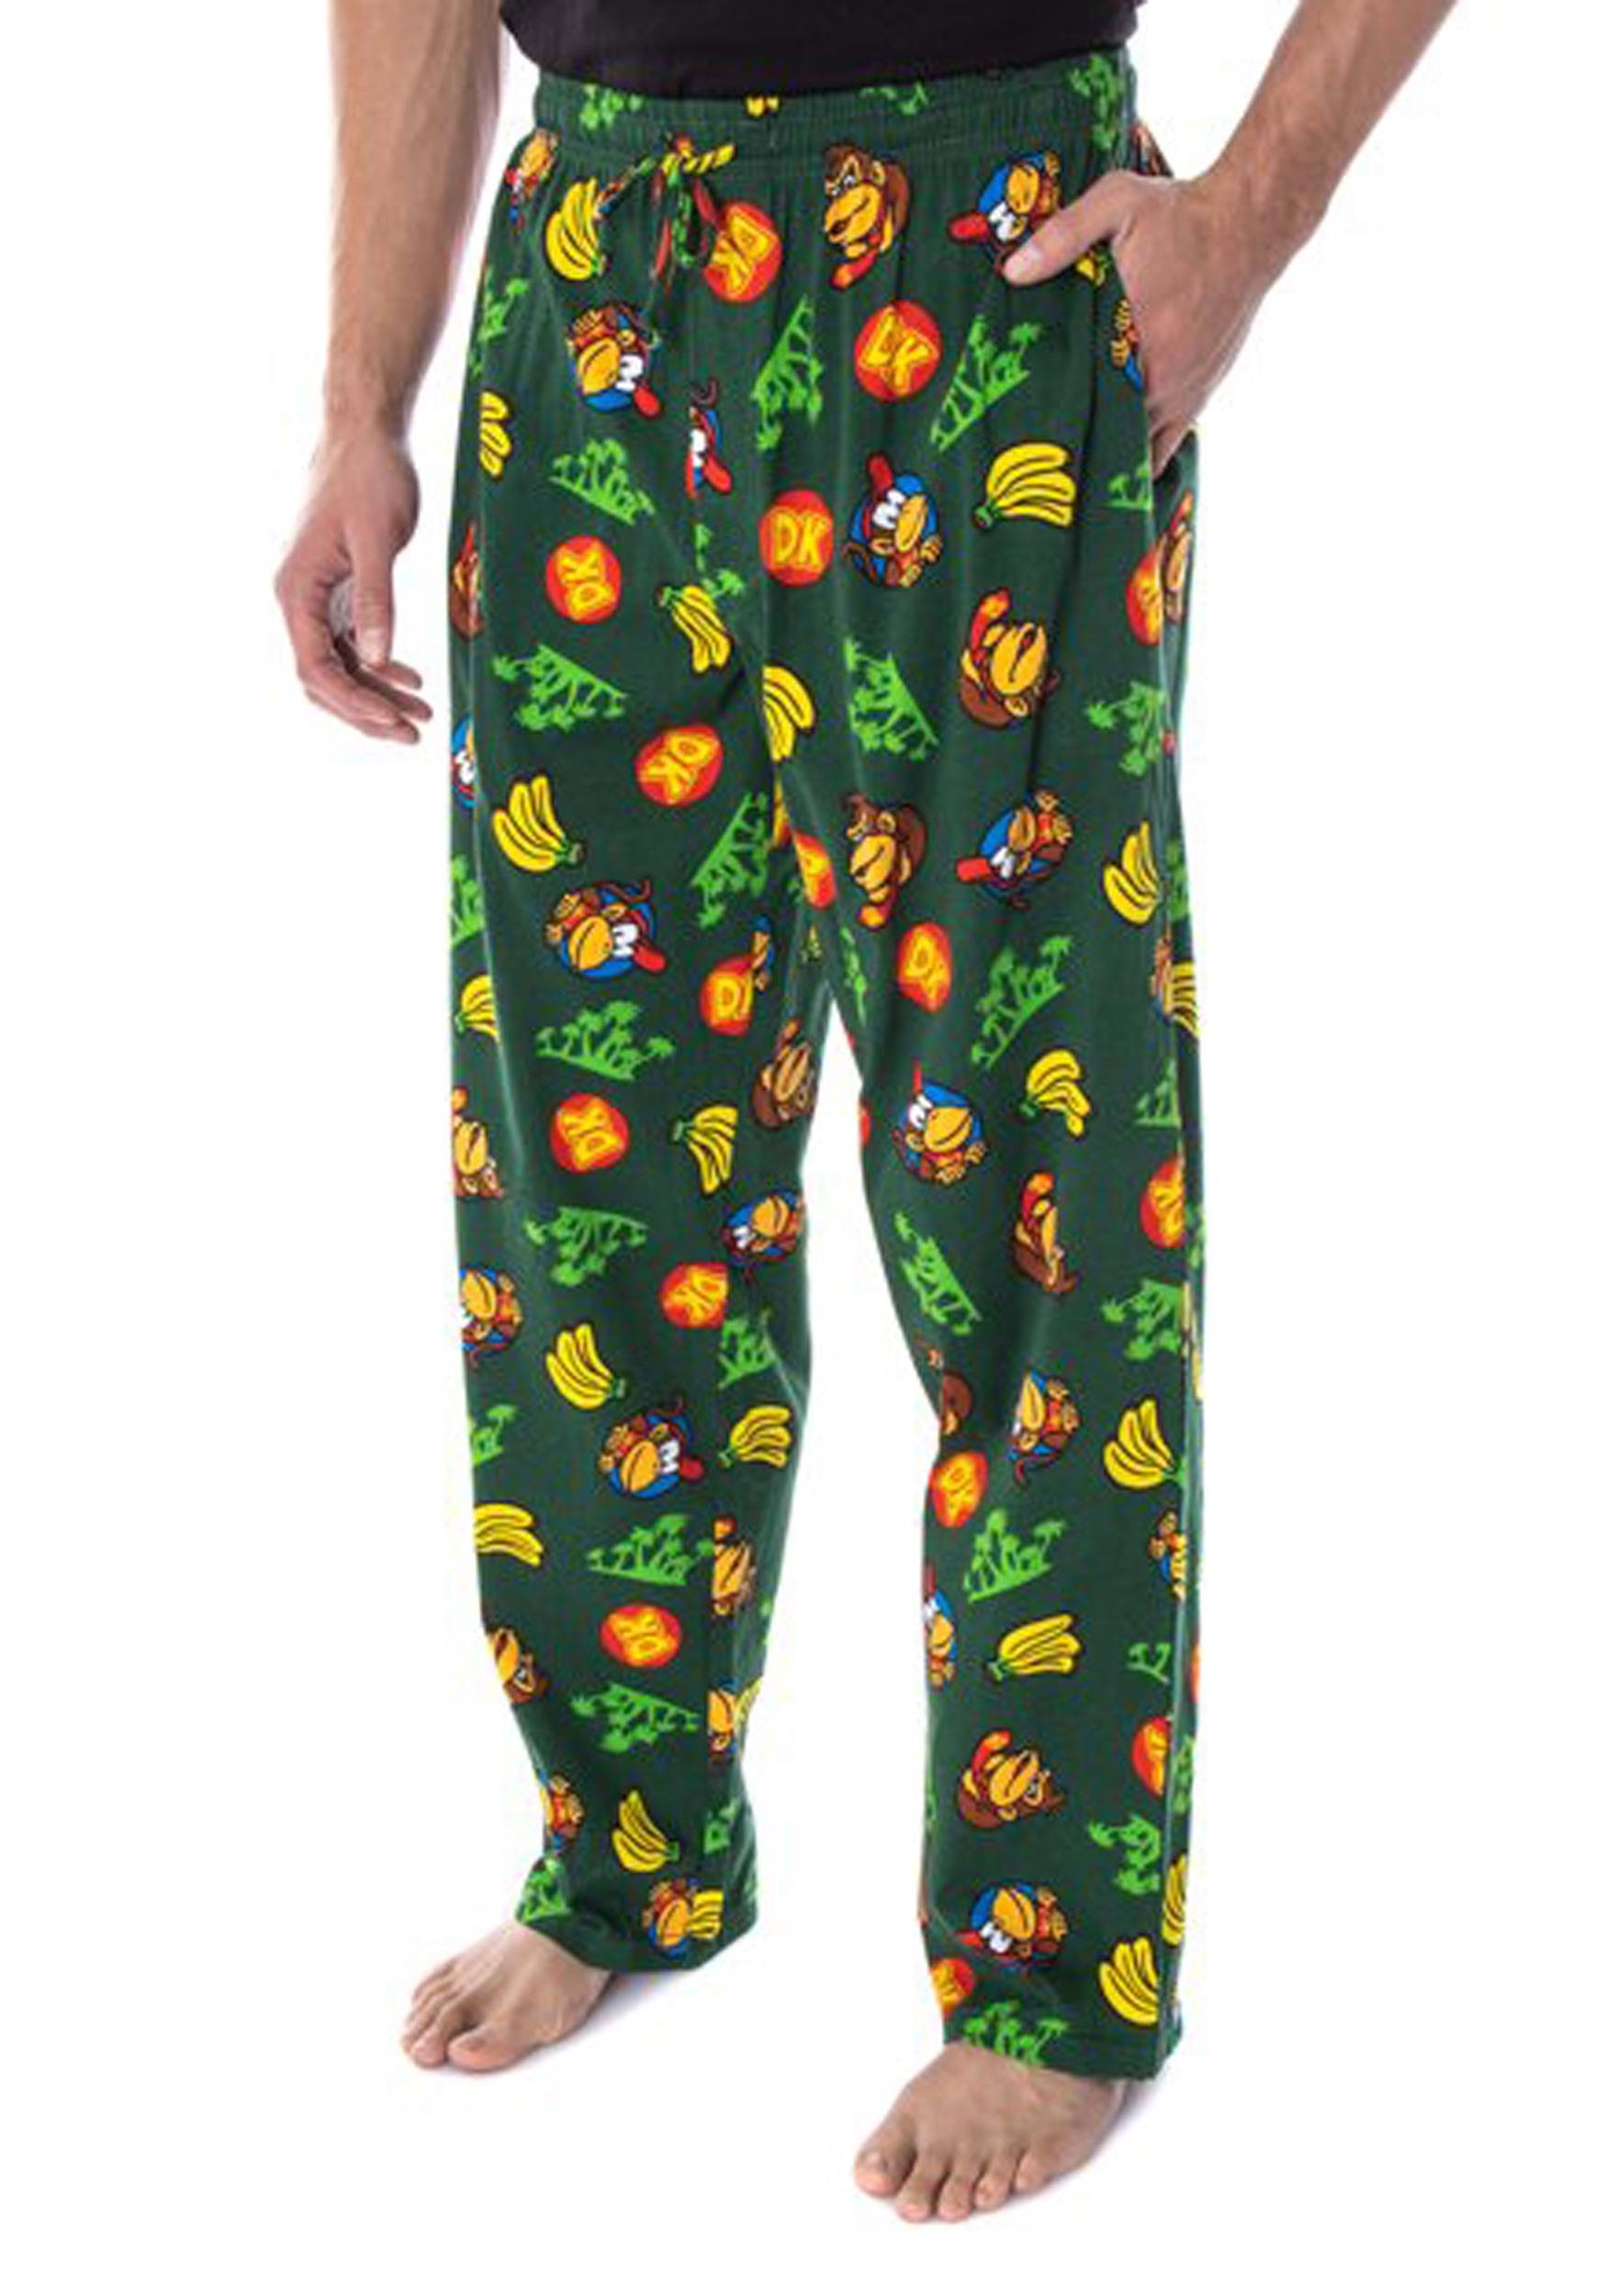 SpongeBob SquarePants Pajamas Pants Mens Size S, Medium Large XL